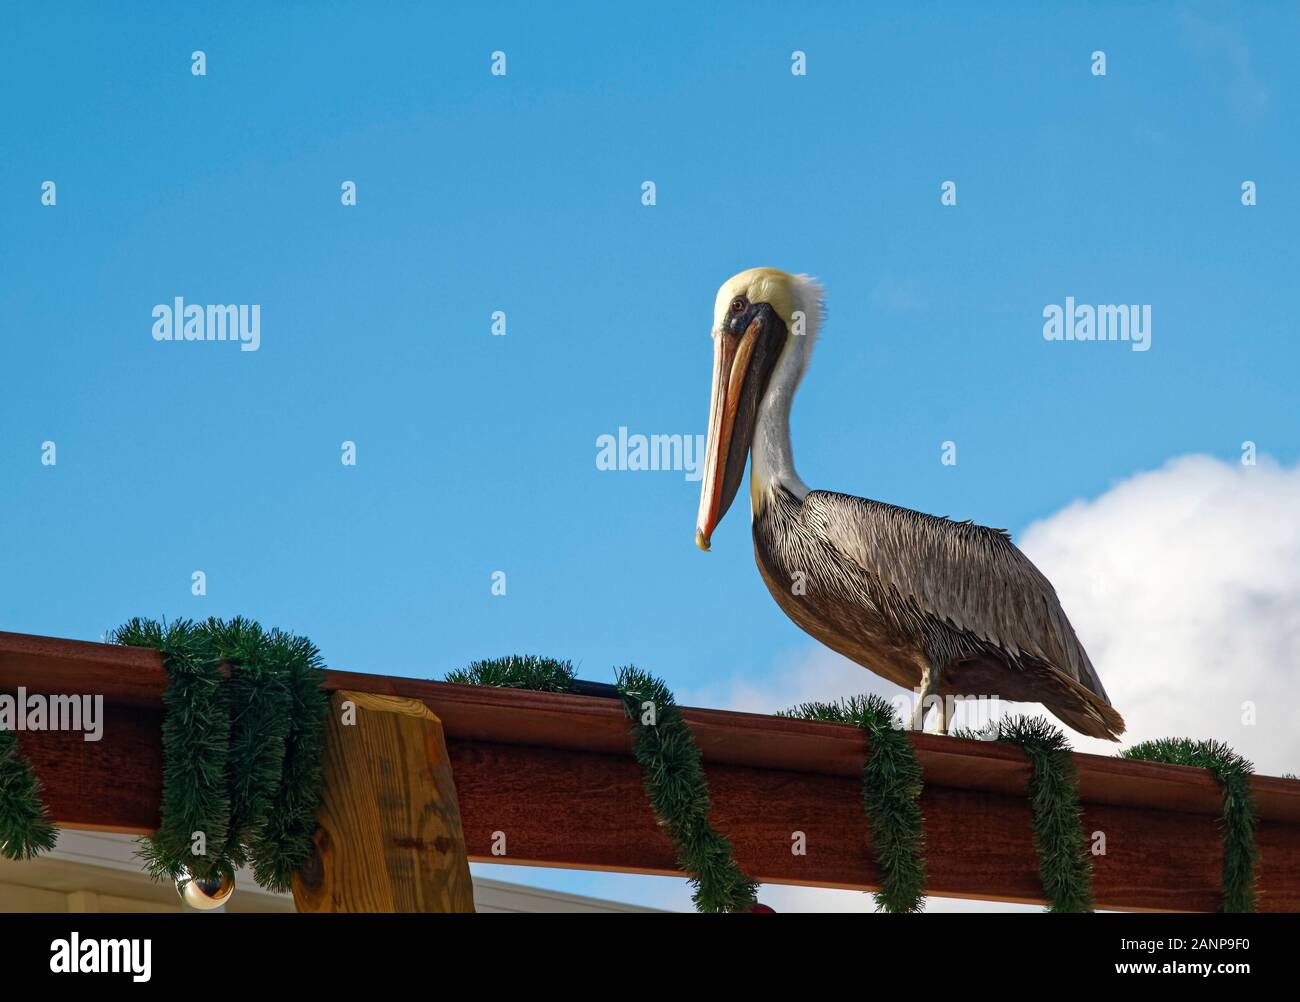 Amerikanischer Brauner Pelikan, Pelecanus occidentalis, großer Vogel, langen Schnabel, sitzen auf den Dock Geländer, tiere, tier, Weihnachtsschmuck, Orange River; Stockfoto